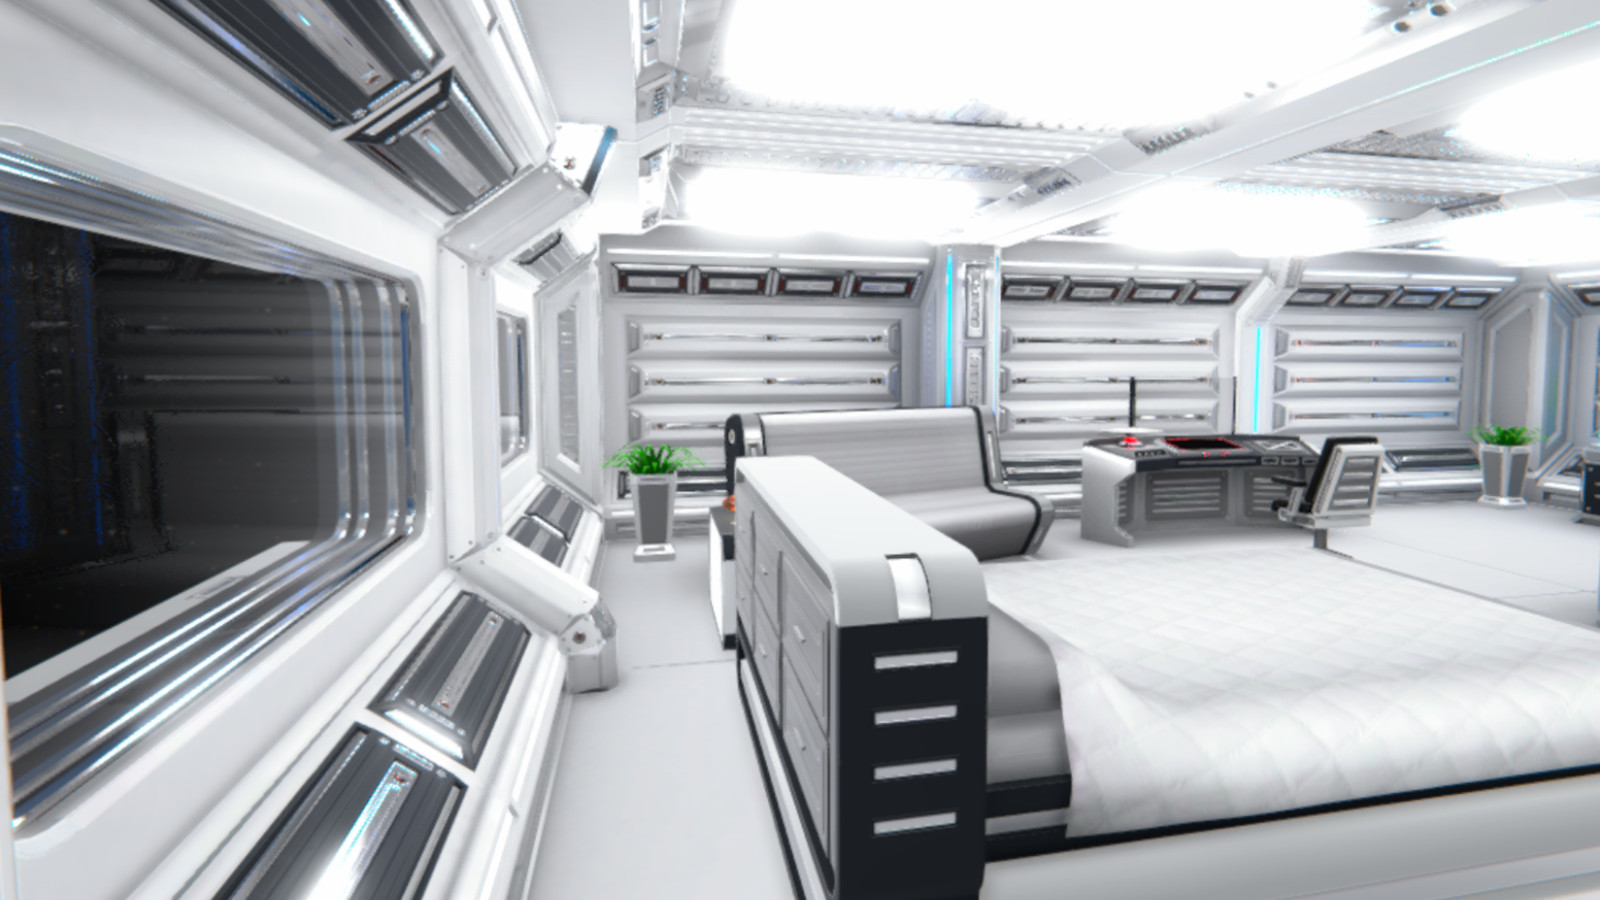 Vr комната metaforce. Комната виртуальной реальности. VR комната. VR Escape. Концепт комнаты виртуальной реальности космоса.